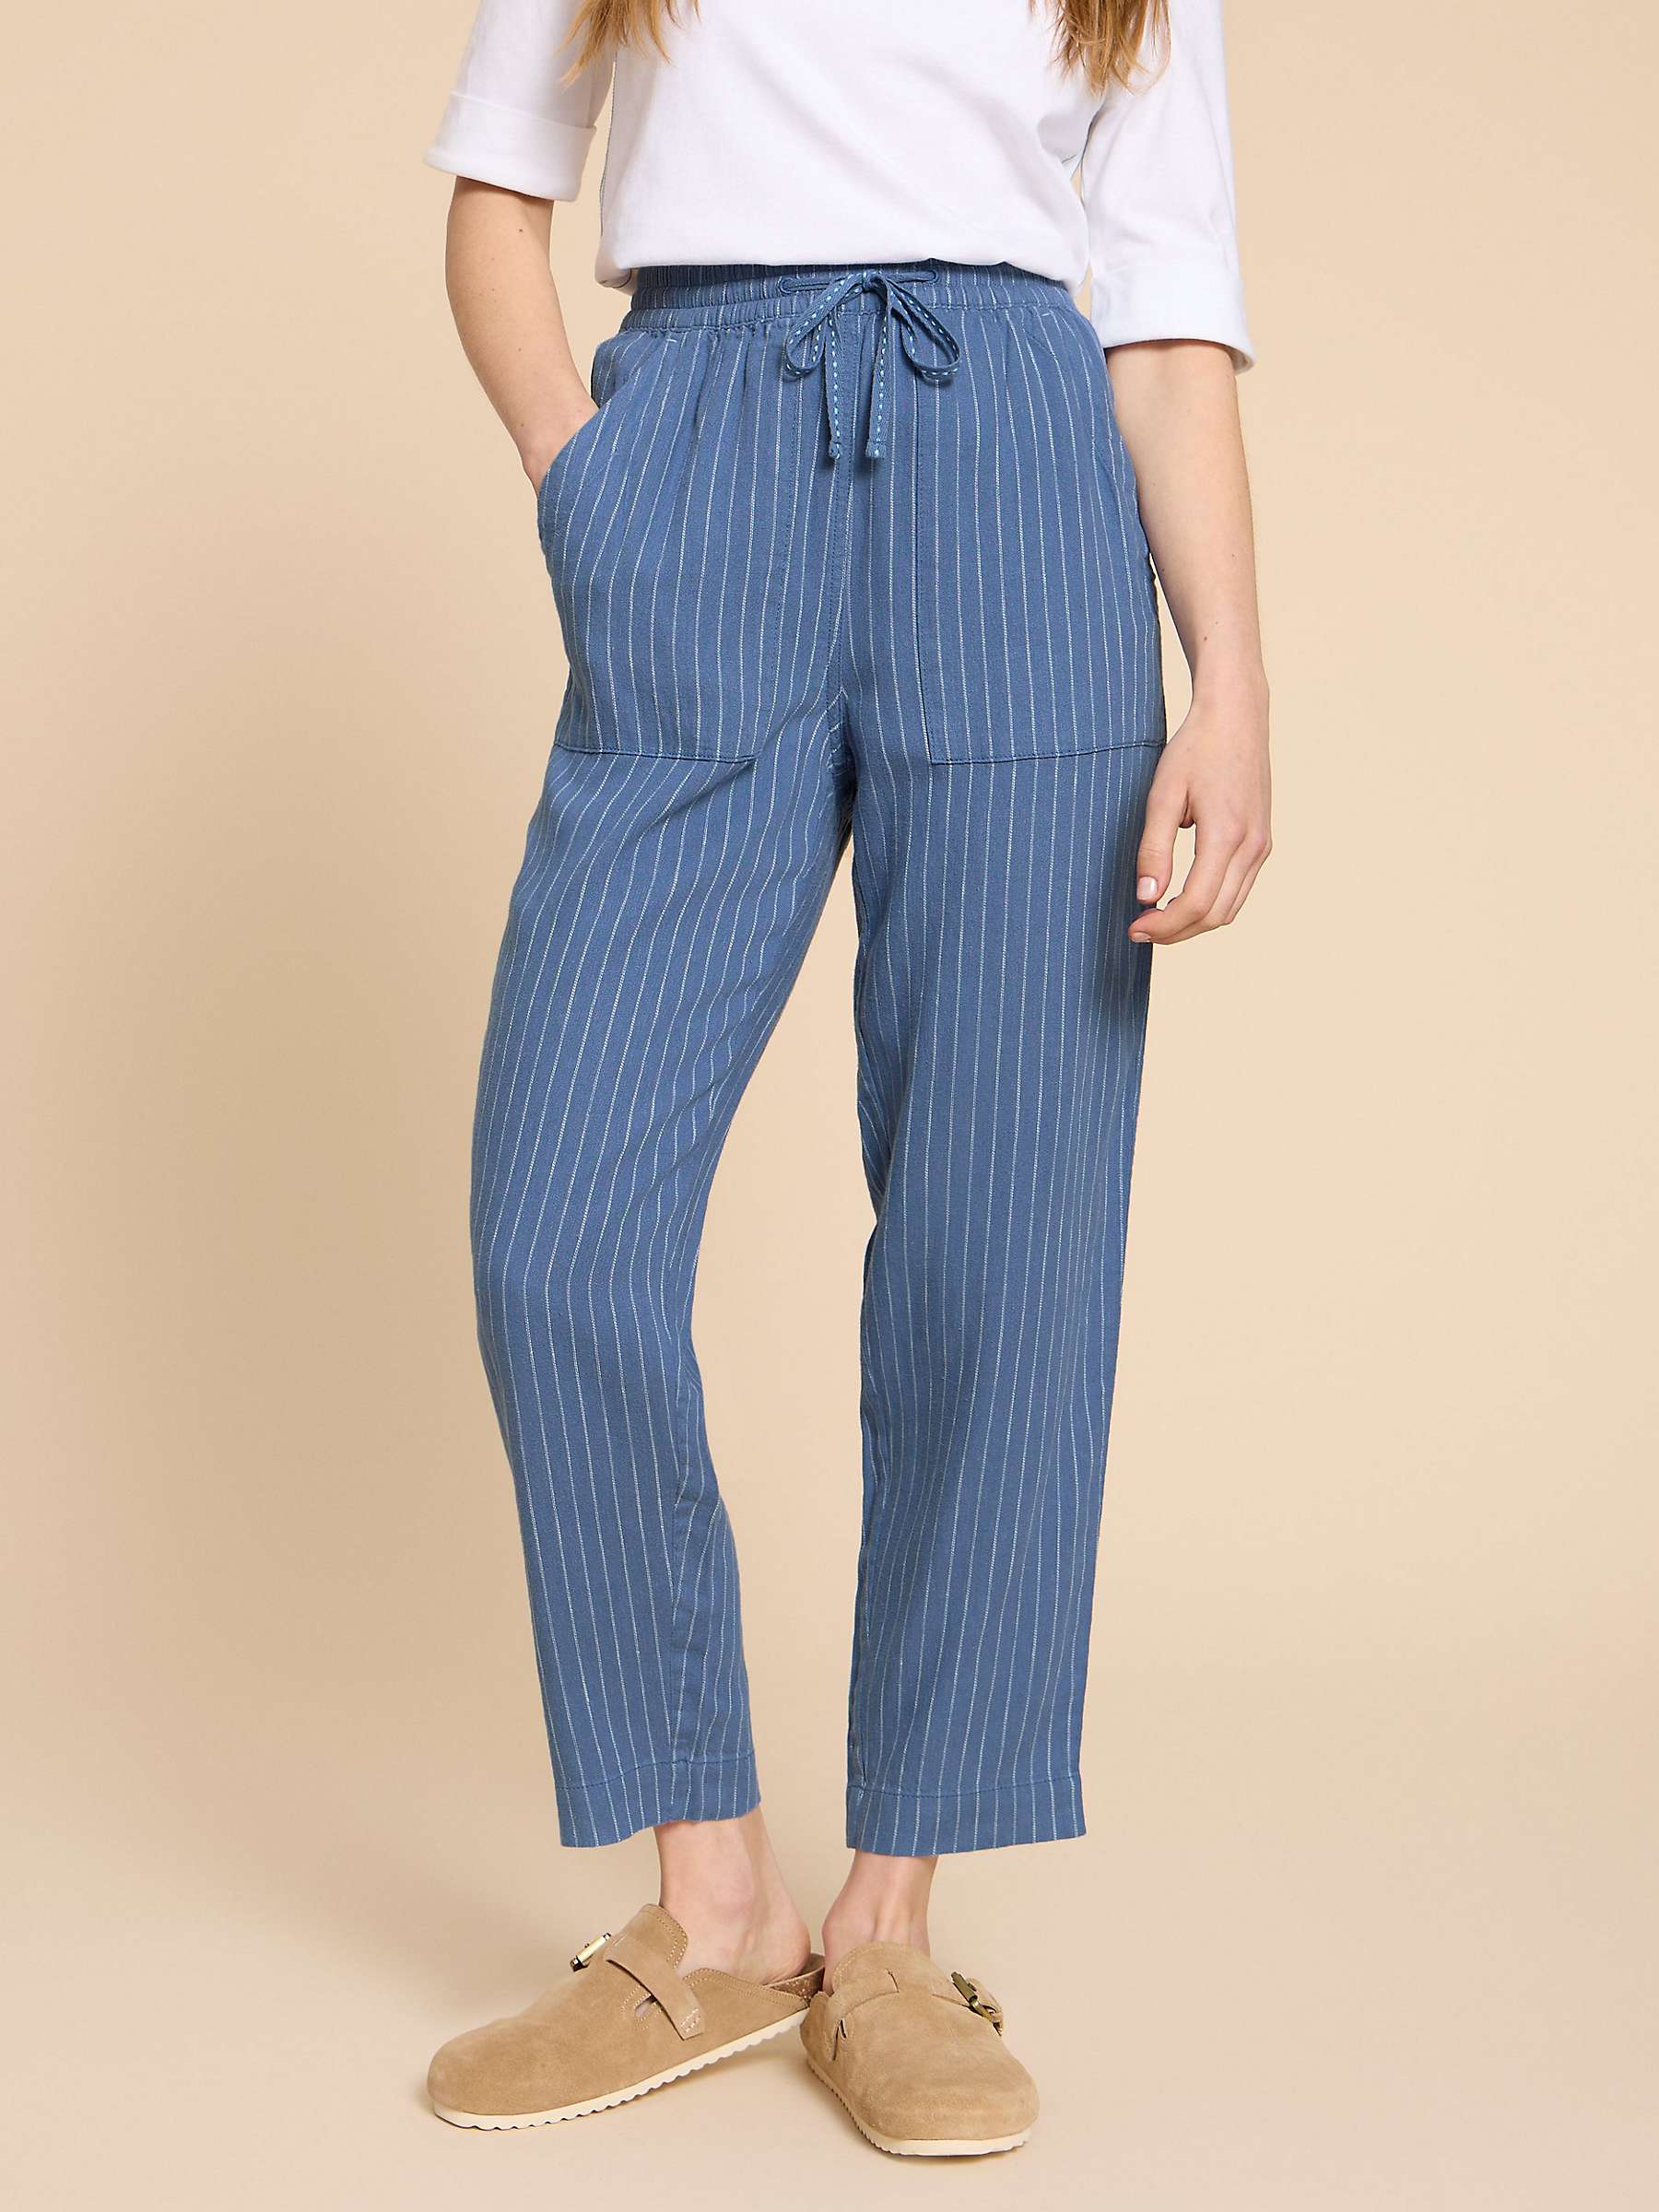 Buy White Stuff Elle Linen Blend Pinstripe Trousers, Blue/White Online at johnlewis.com